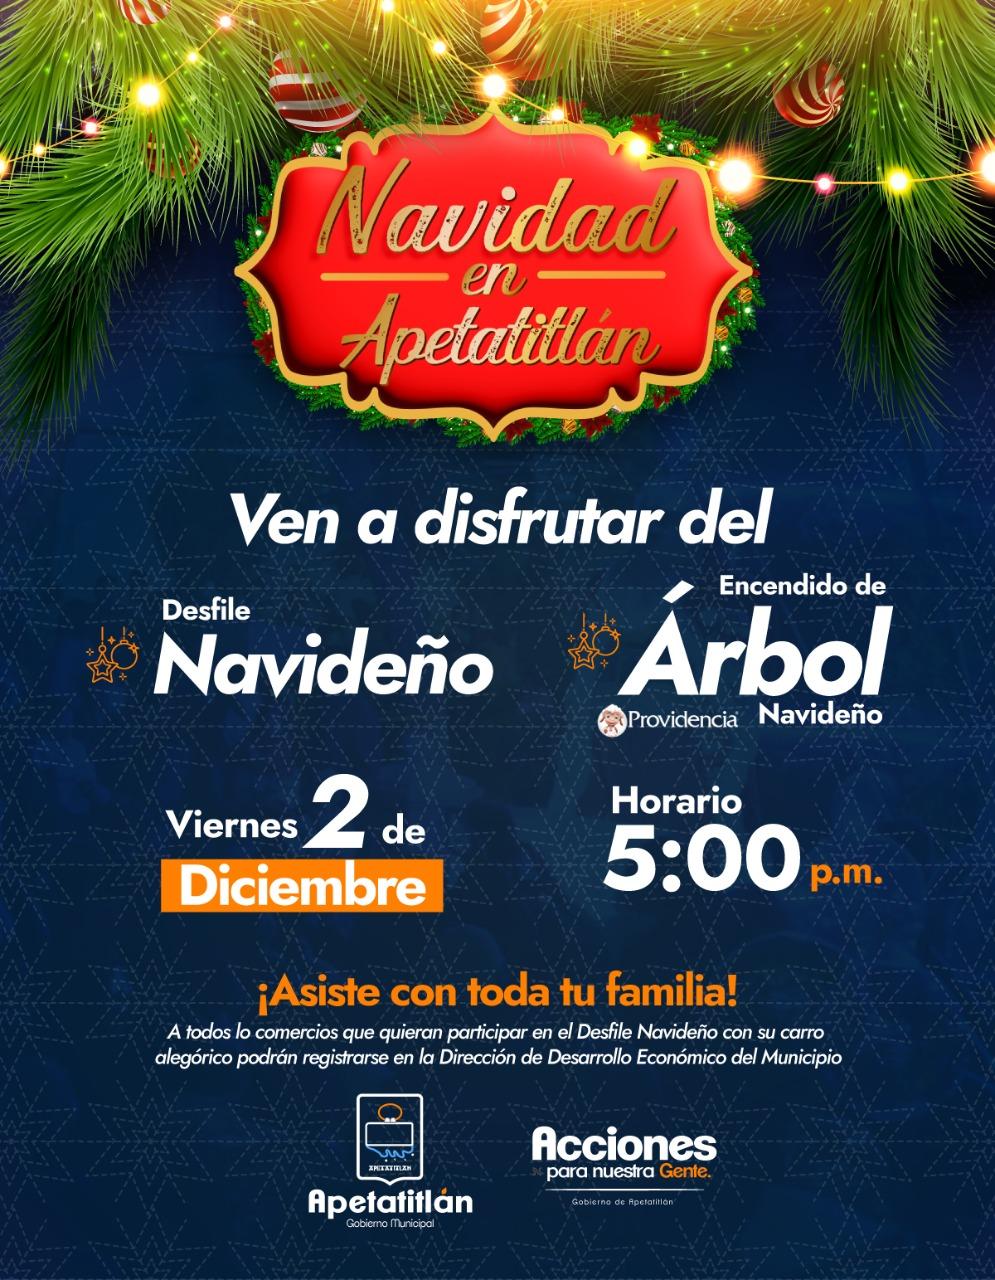 Este fin de semana llega la Navidad al municipio de Apetatitlán